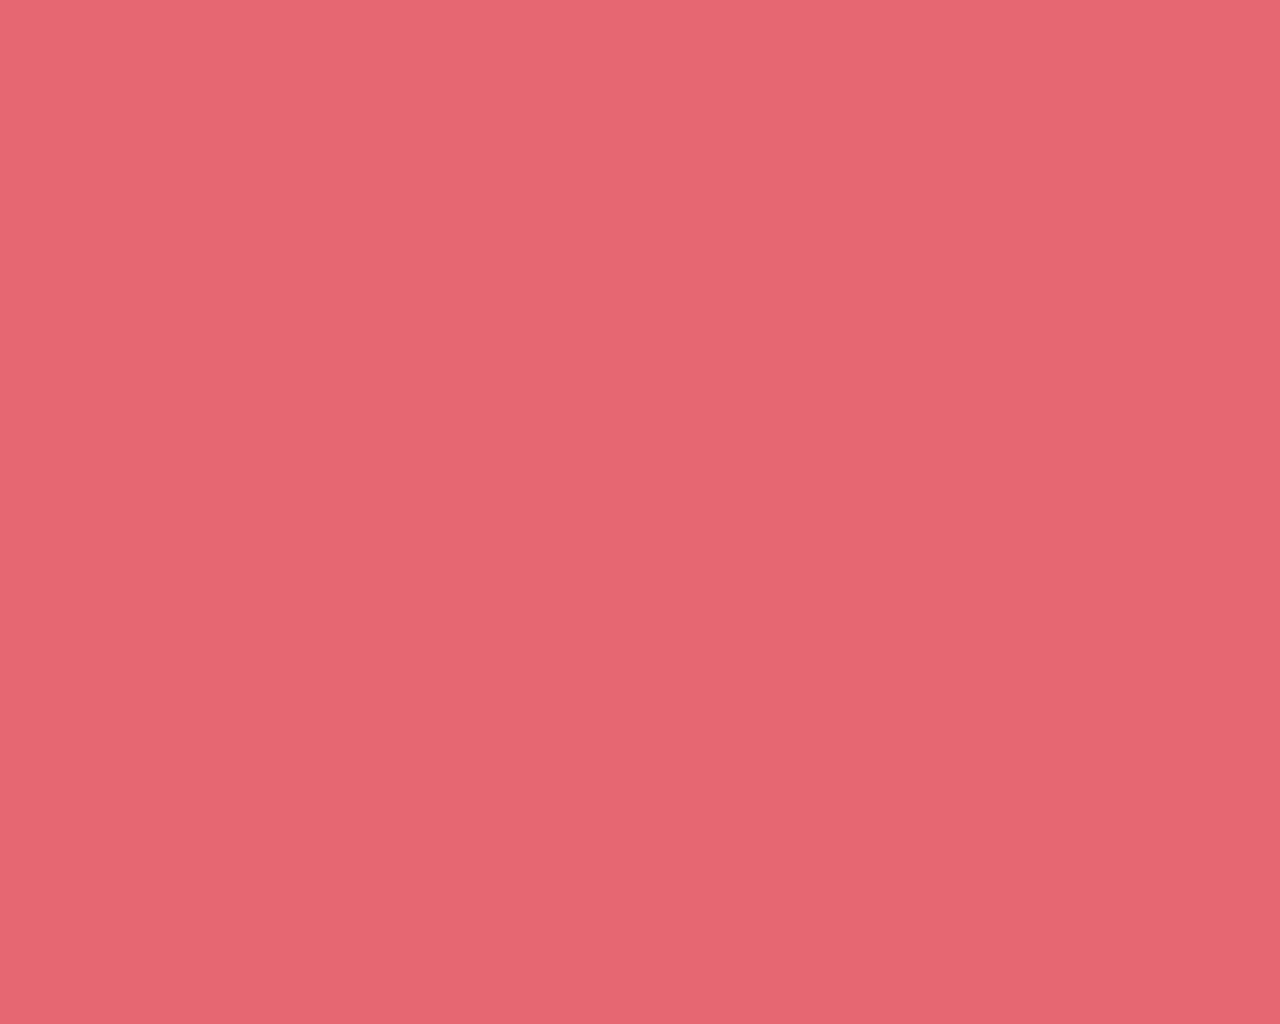 1280x1024 Light Carmine Pink Solid Color Background